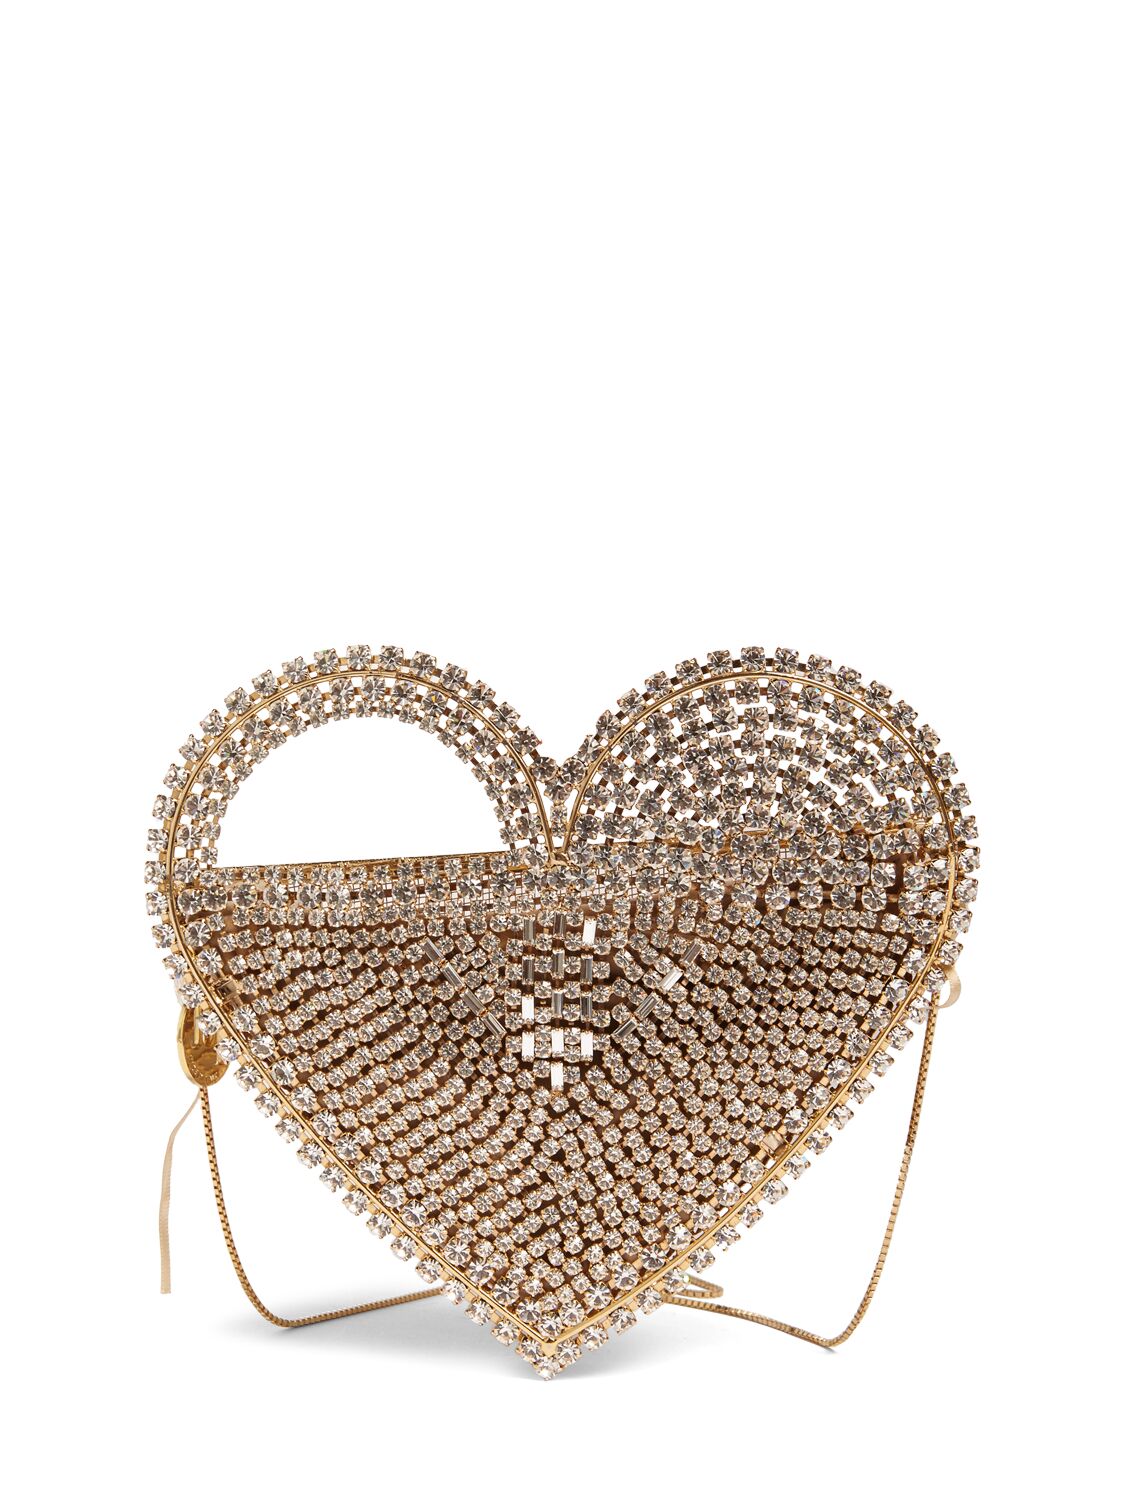 Rosantica Regina Heart Crystal Top Handle Bag In Gold,crystals